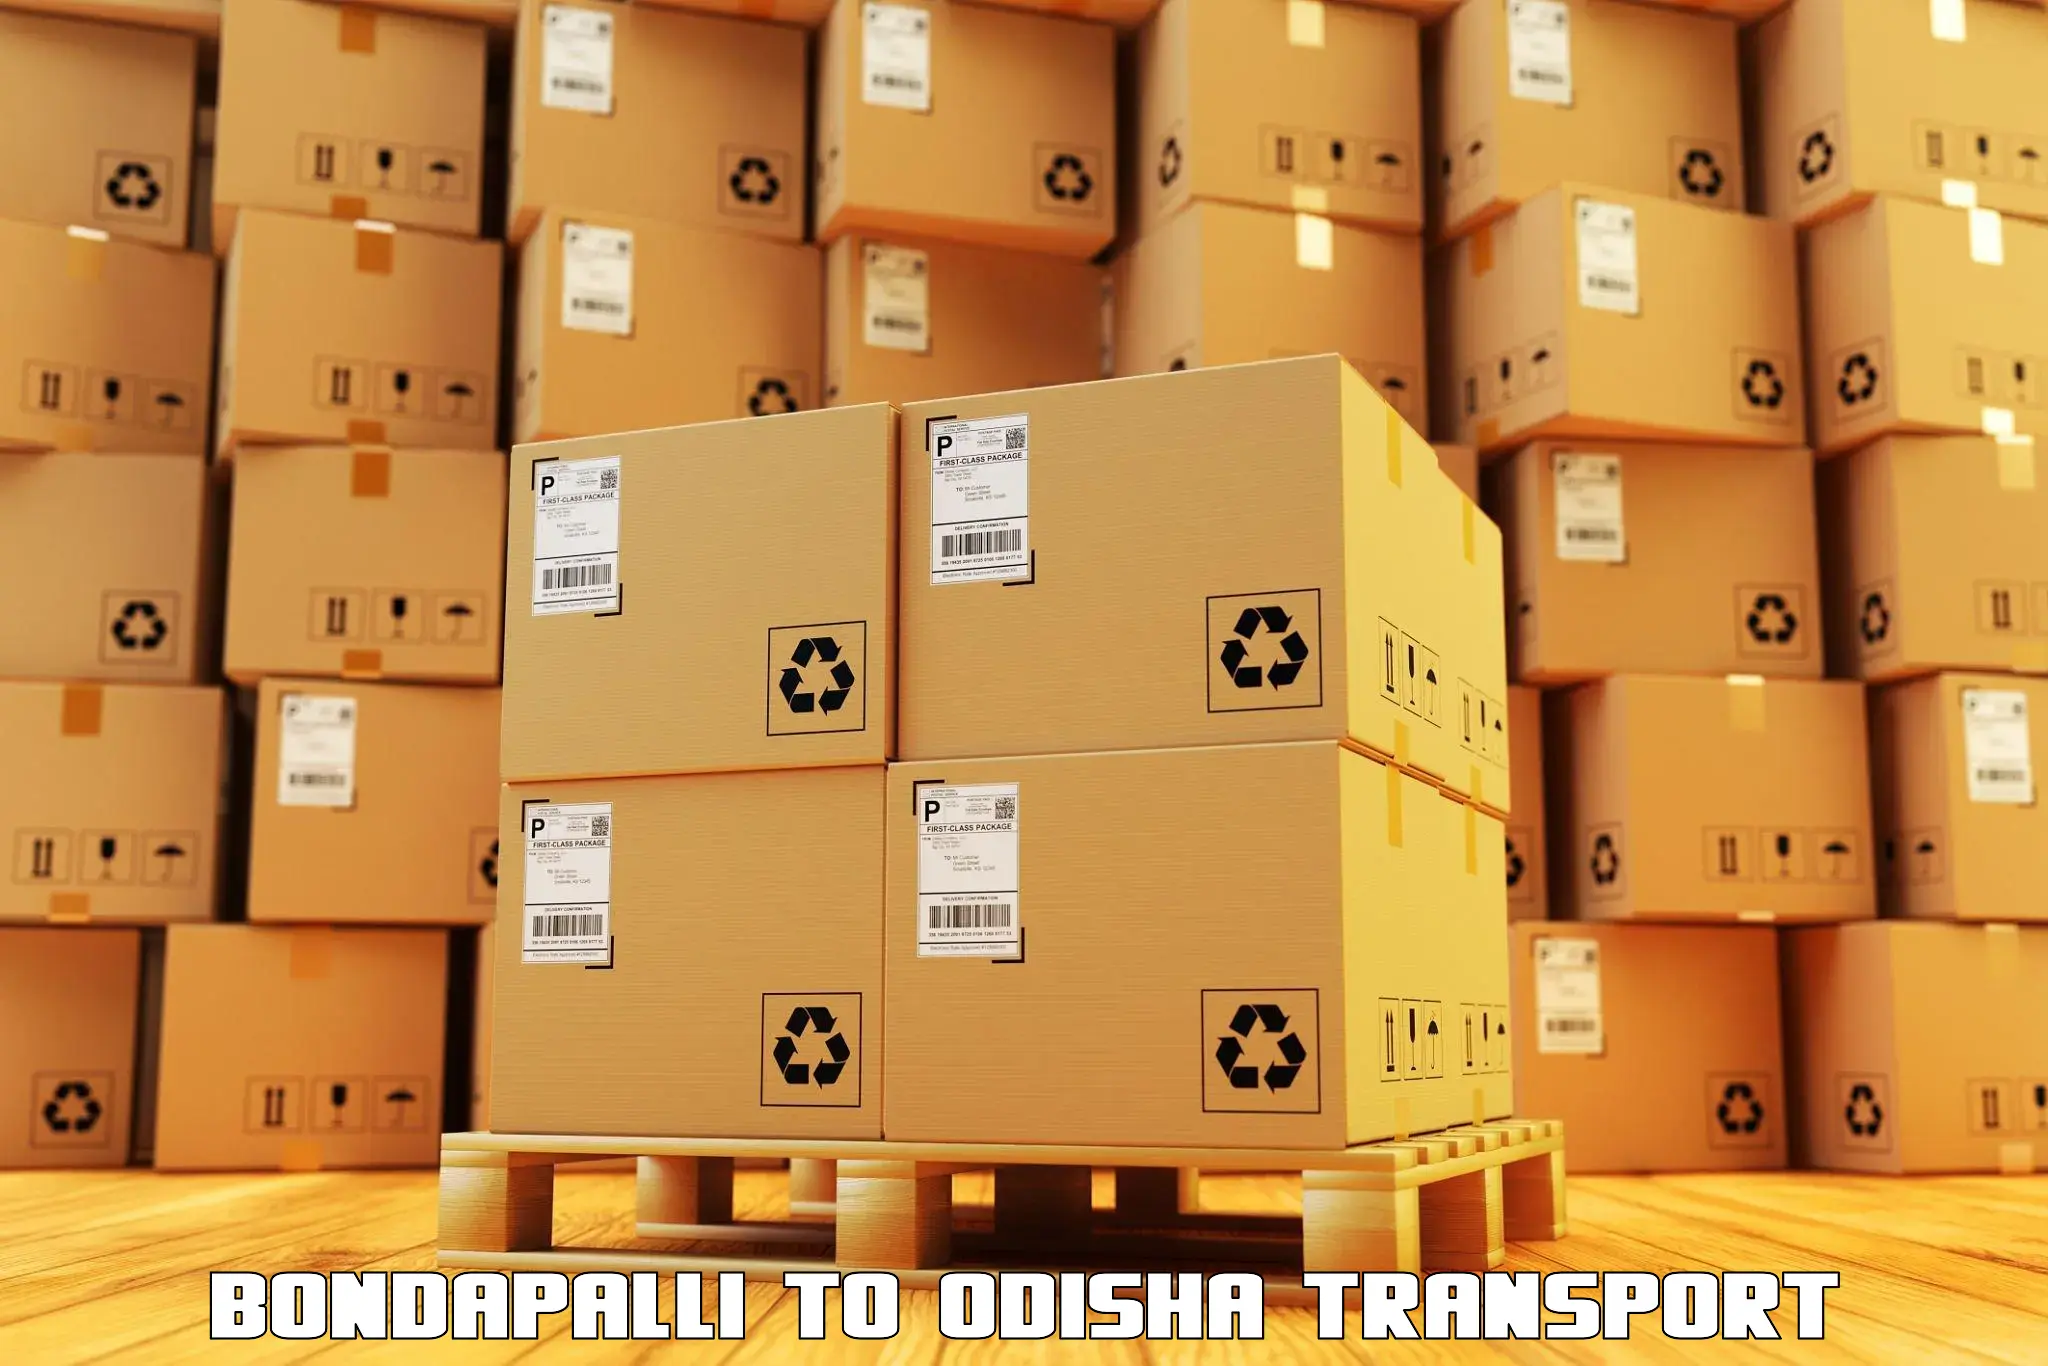 Online transport service Bondapalli to Galleri